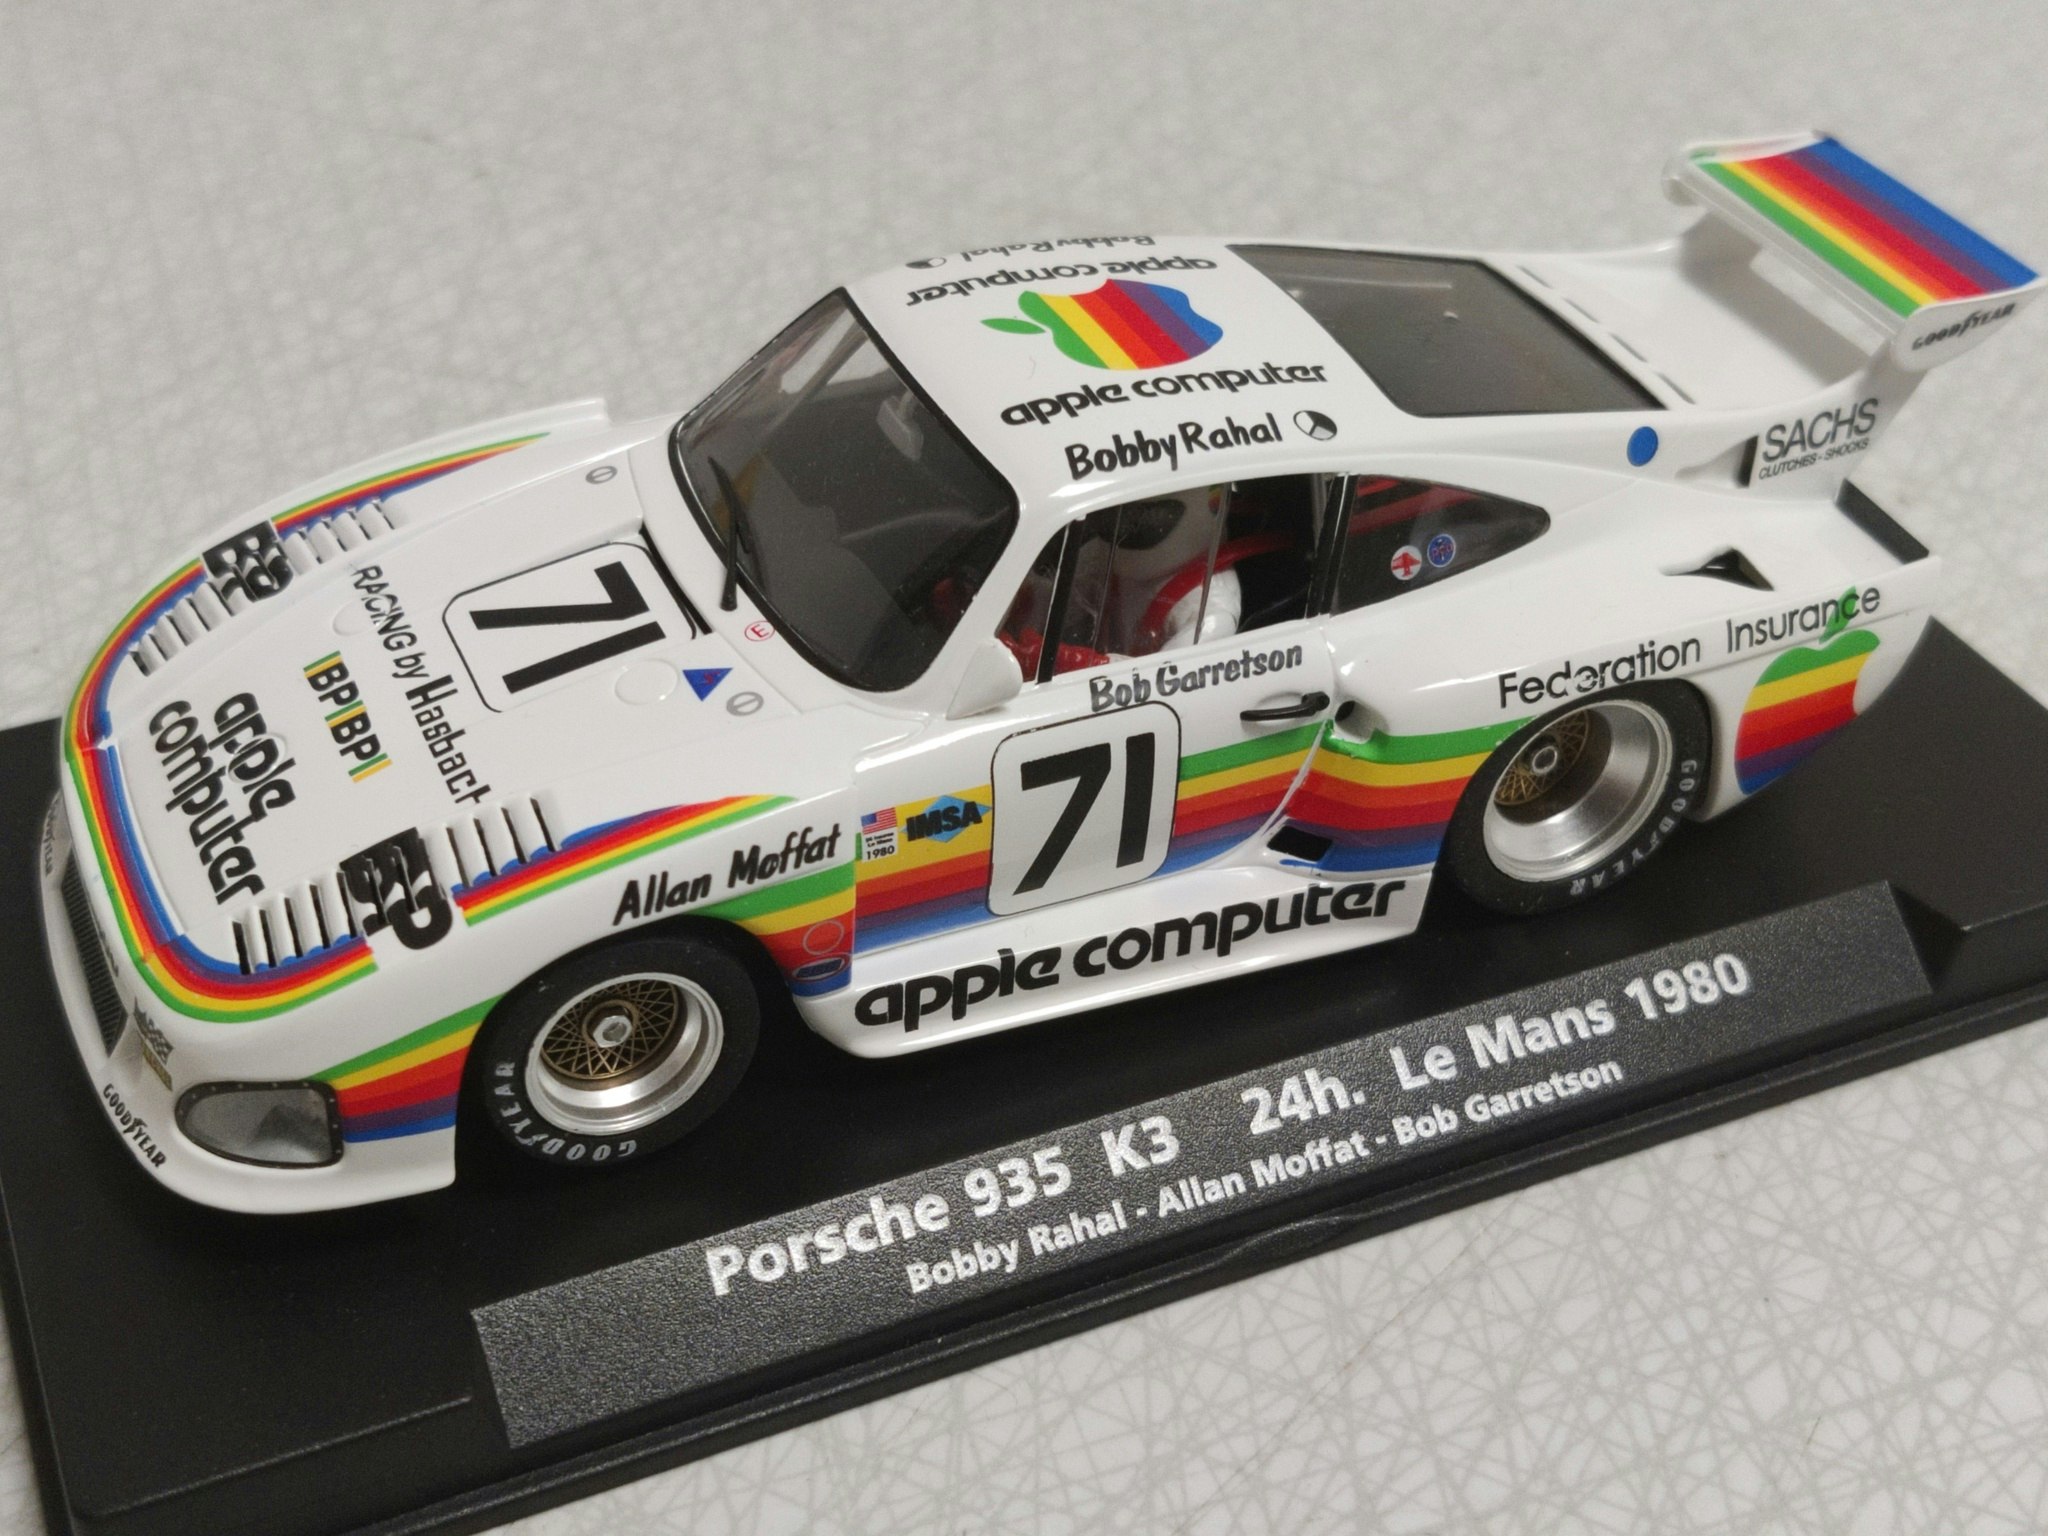 FLY Car Model - Porsche 935 K3 - LeMans 1980 - Bobby Rahal